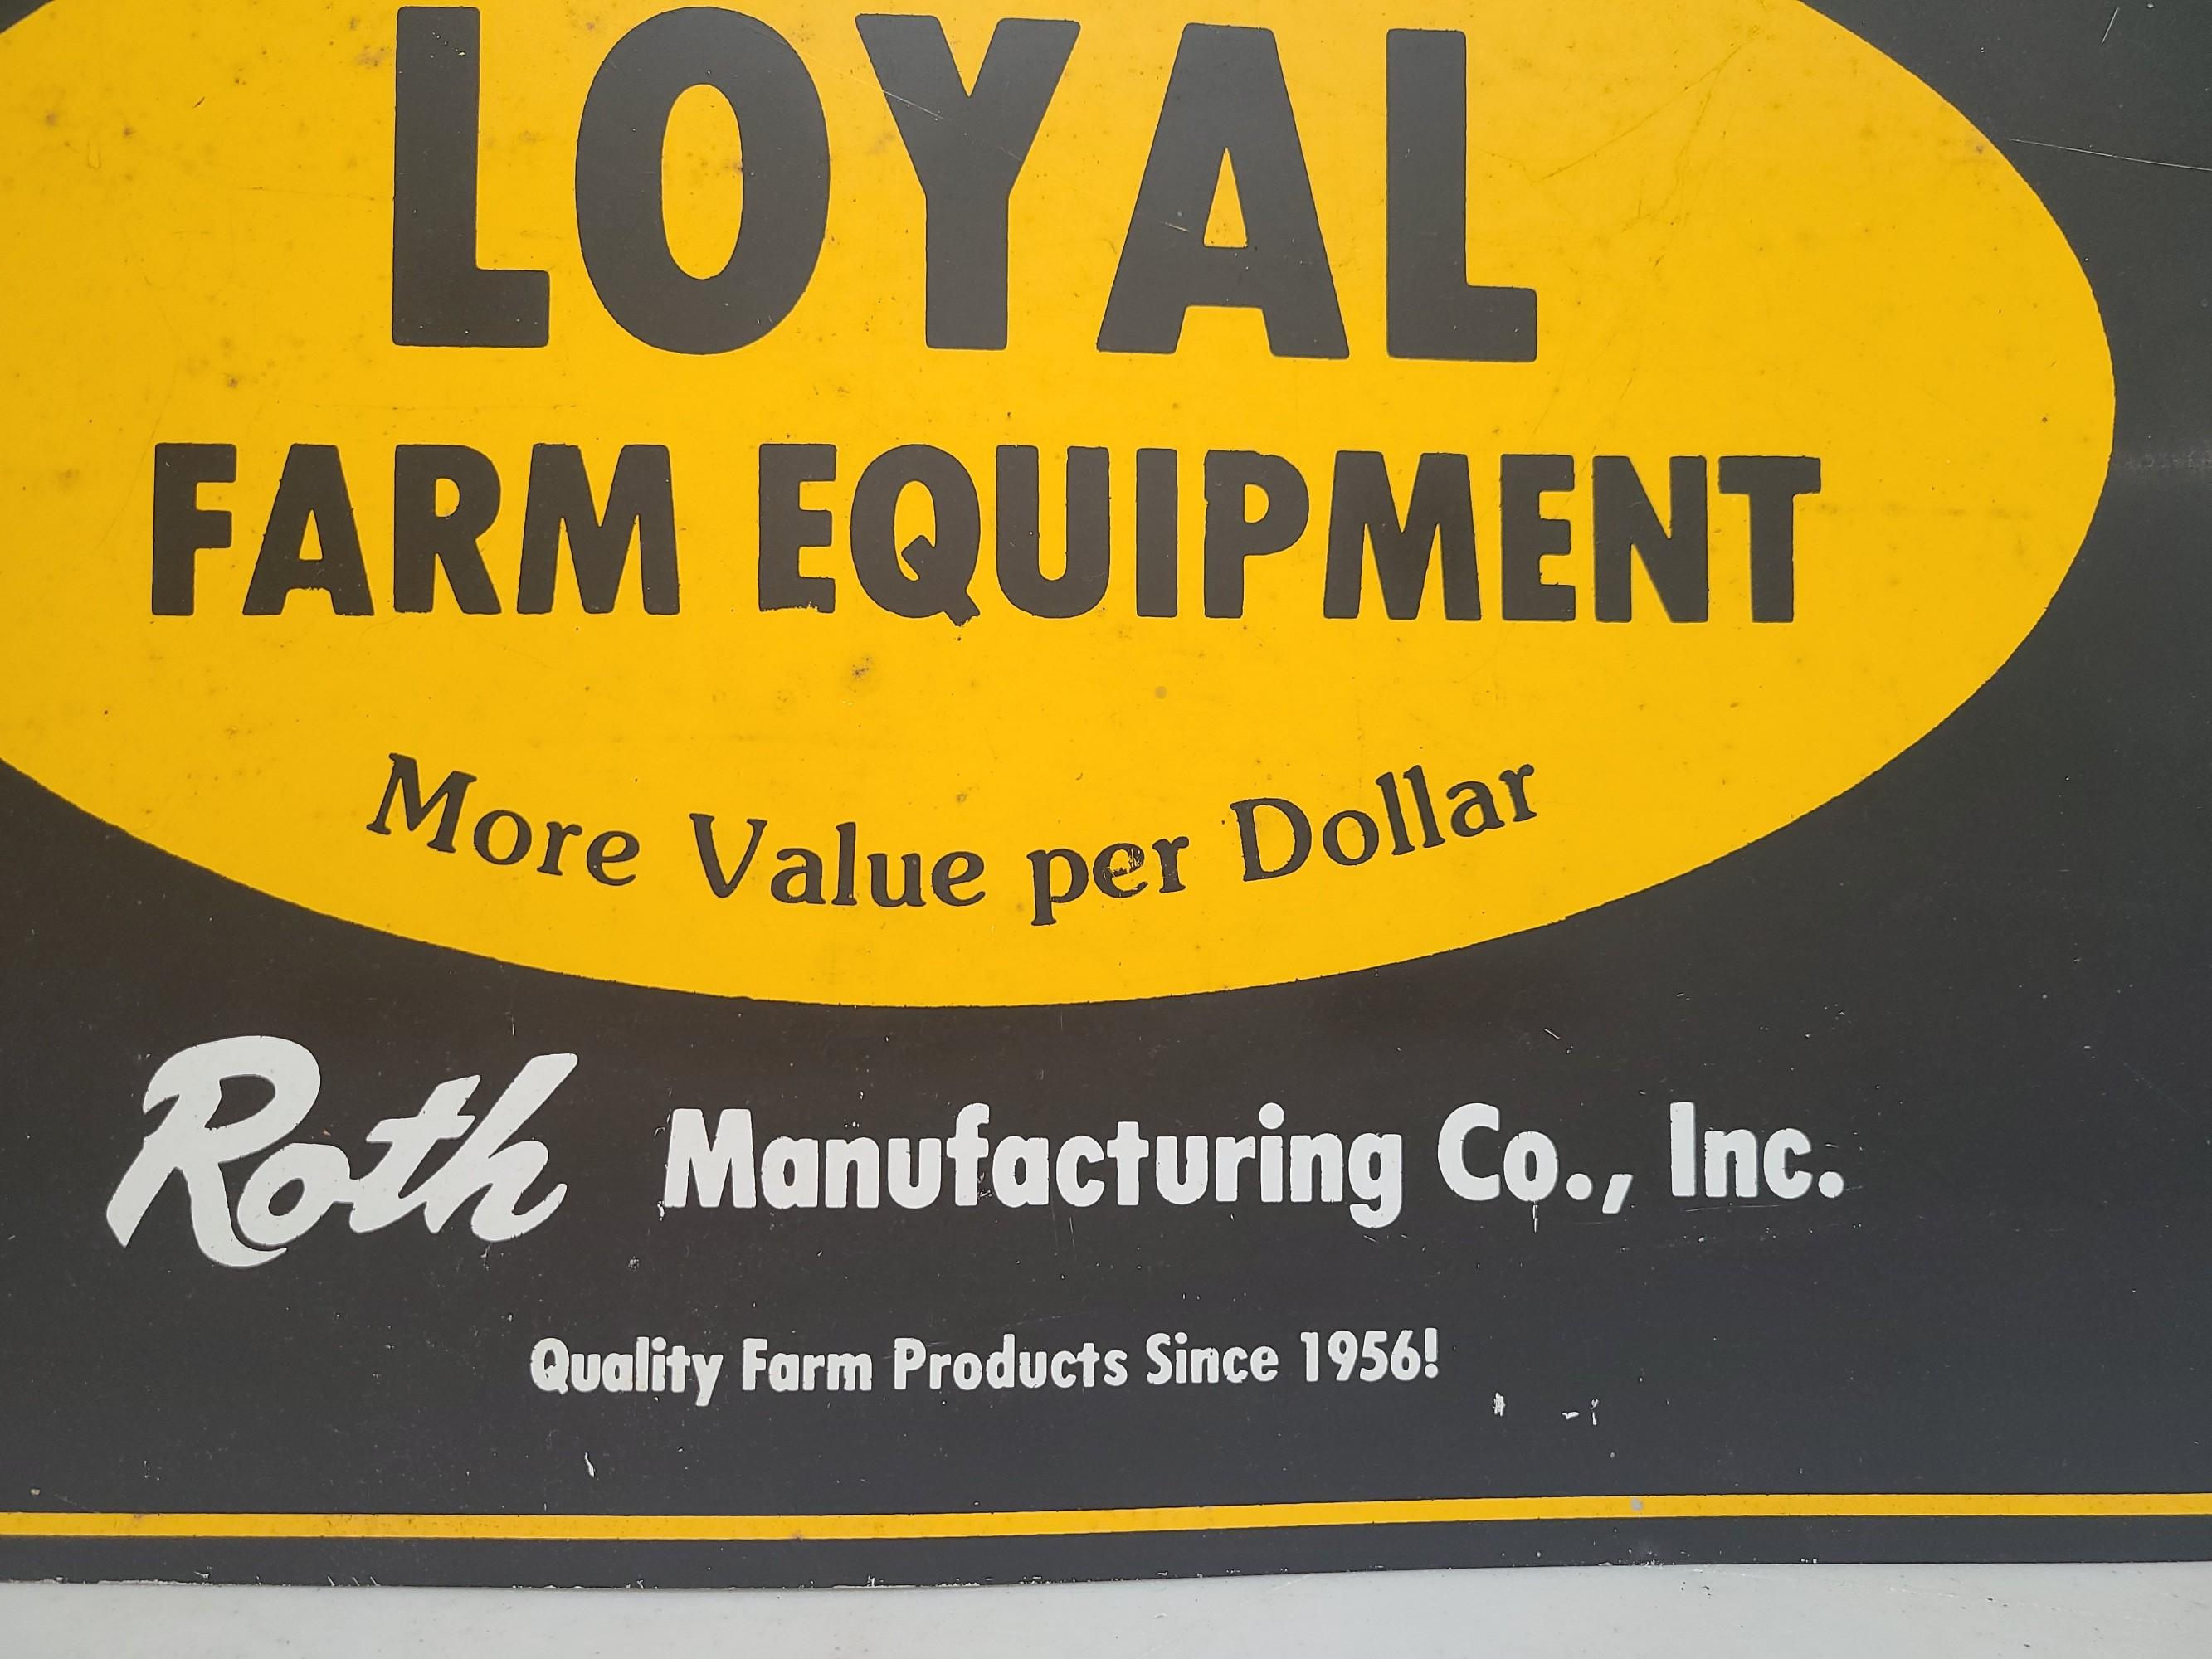 SST, Loyal Farm Equipment Sign